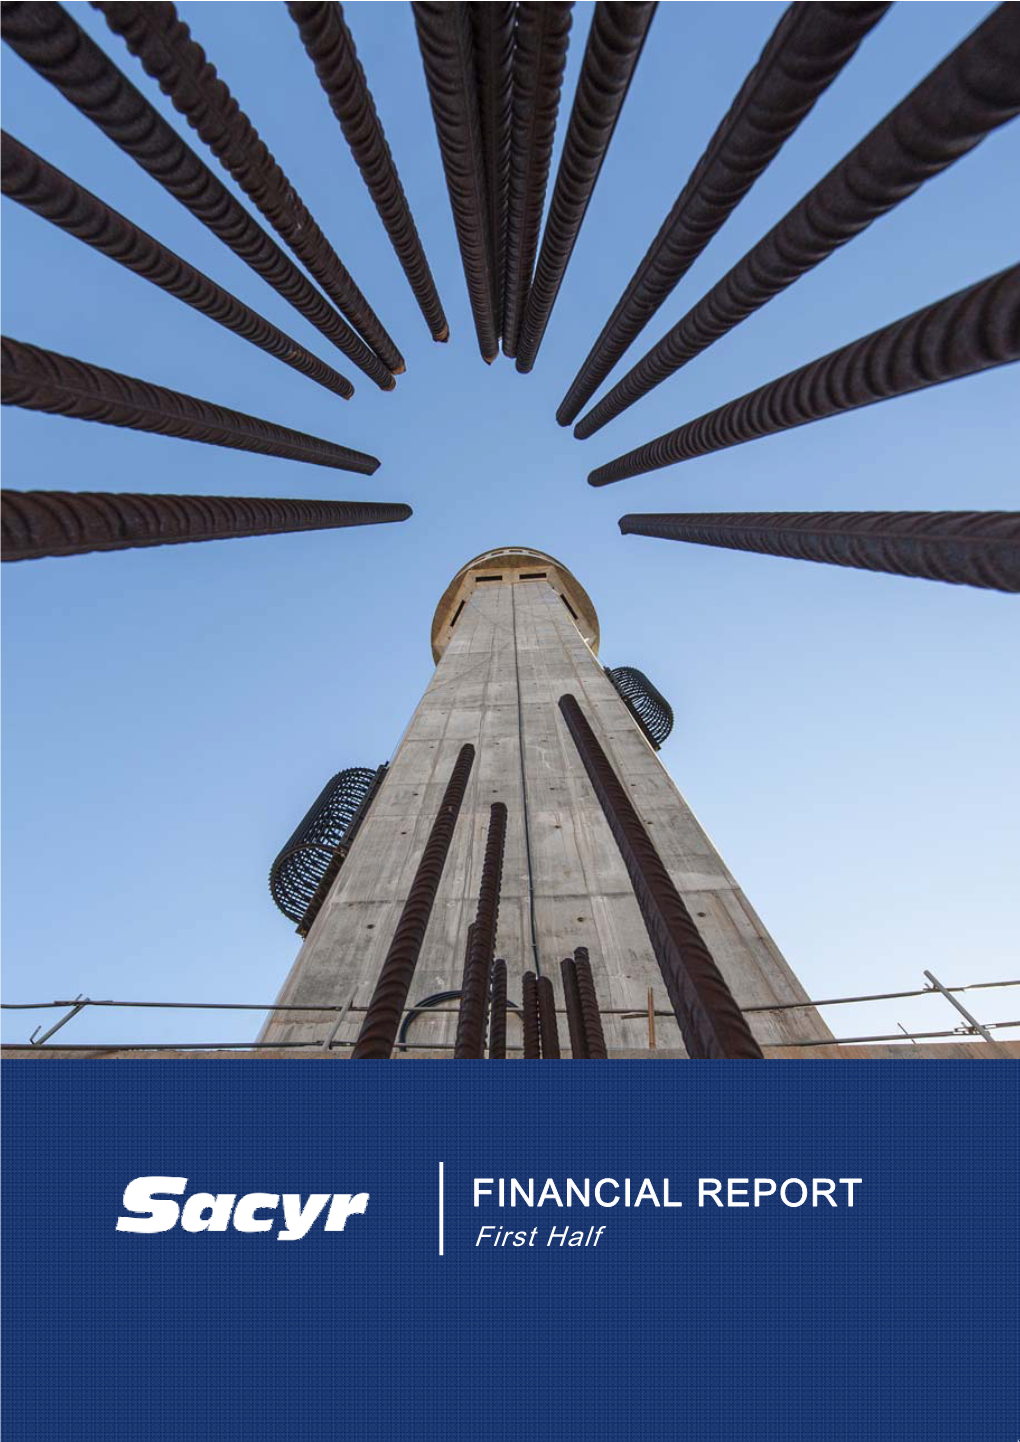 FINANCIAL REPORT First Half